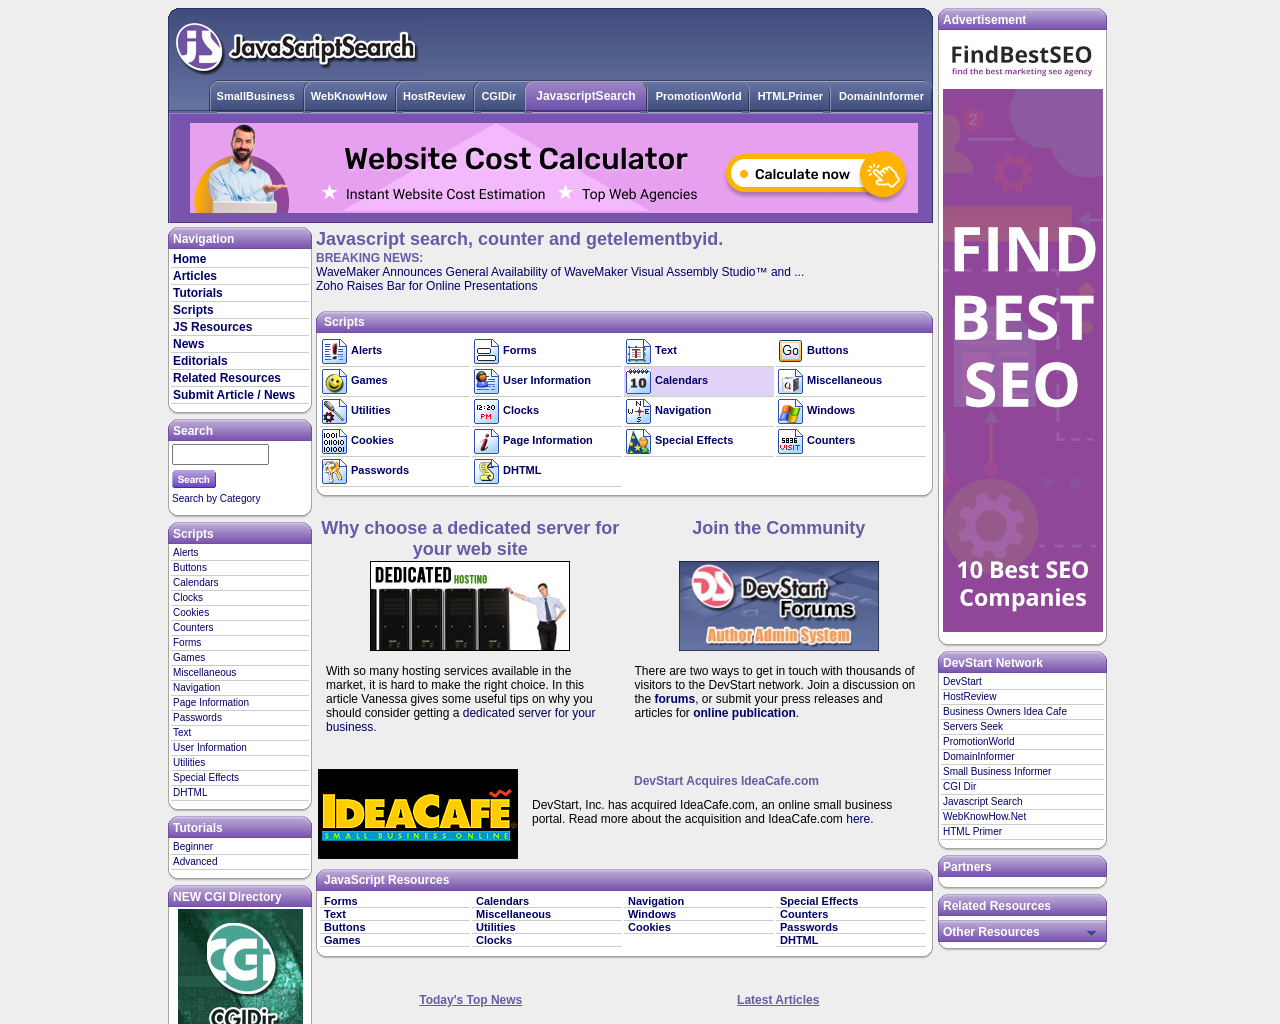 javascriptsearch.com